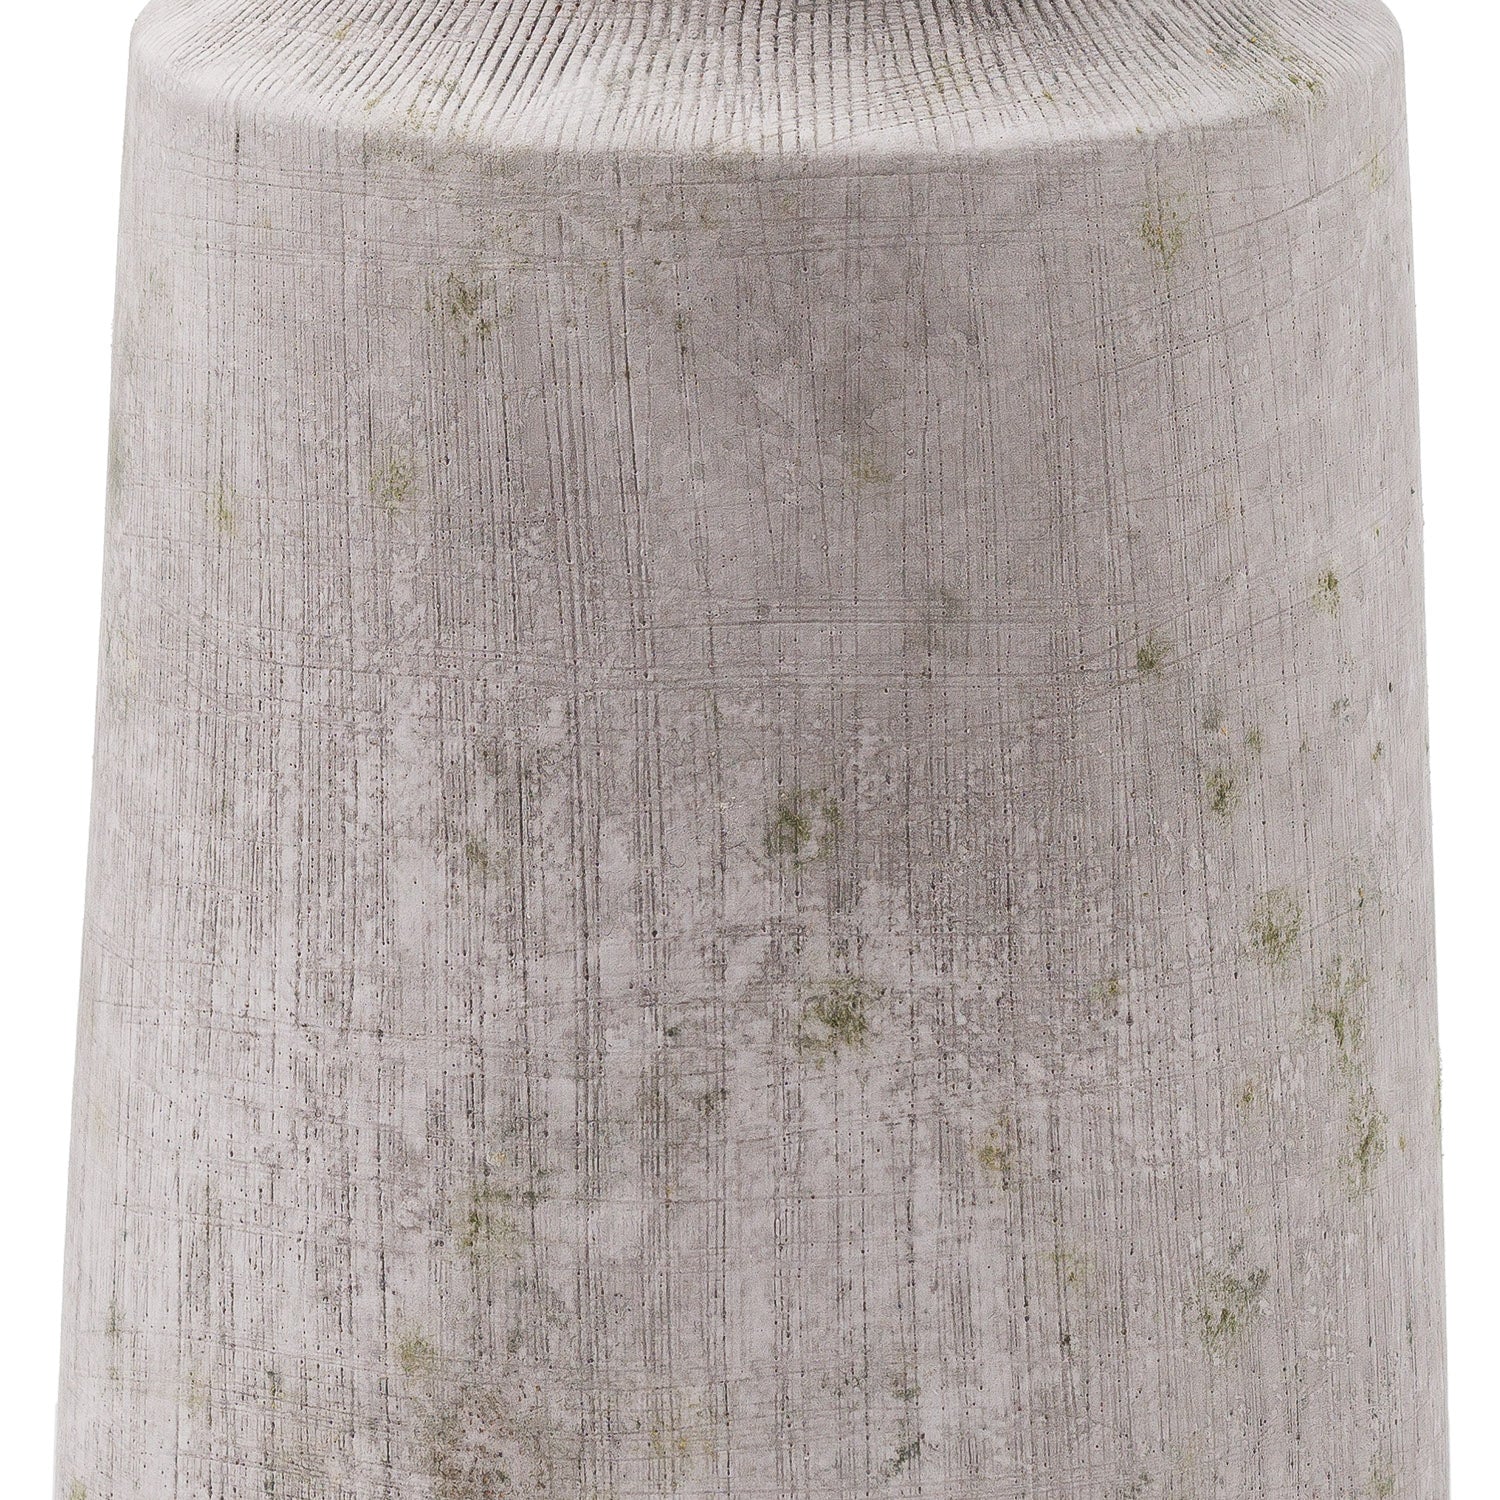 Bloomville Urn Stone Vase